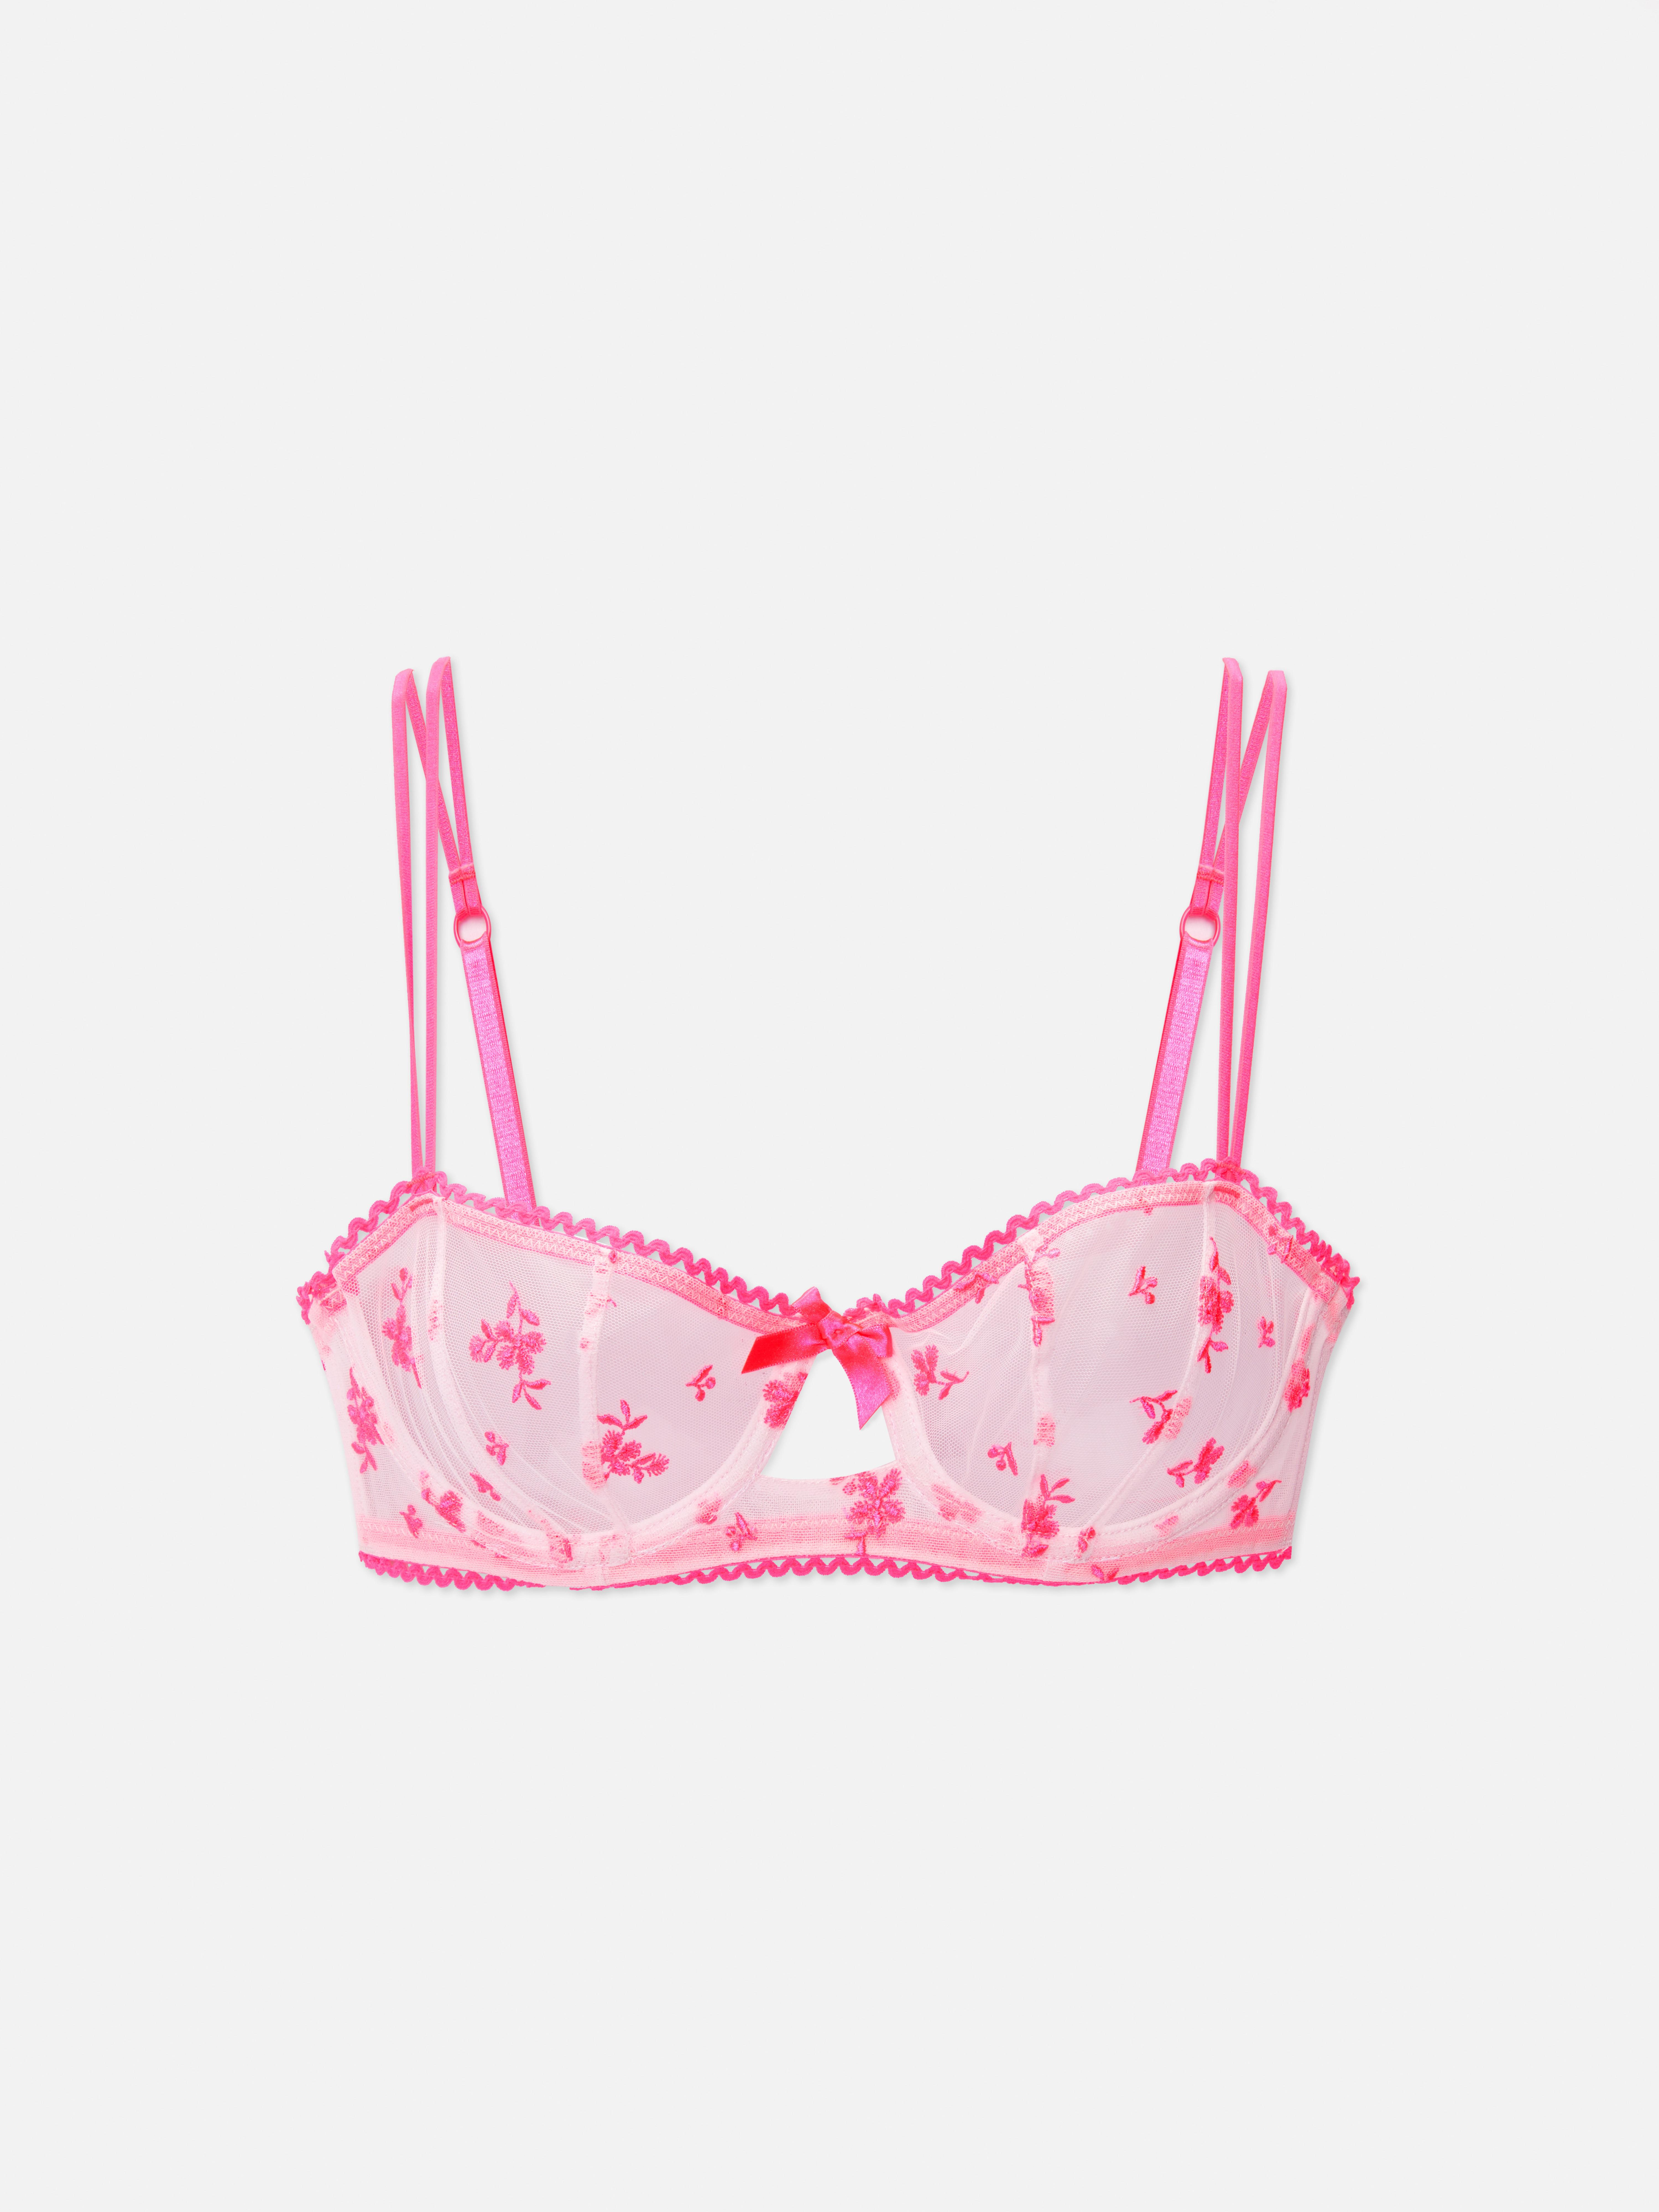 BNWT PRIMARK NON Padded Pink Lace Bra Bralette 34B £3.00 - PicClick UK